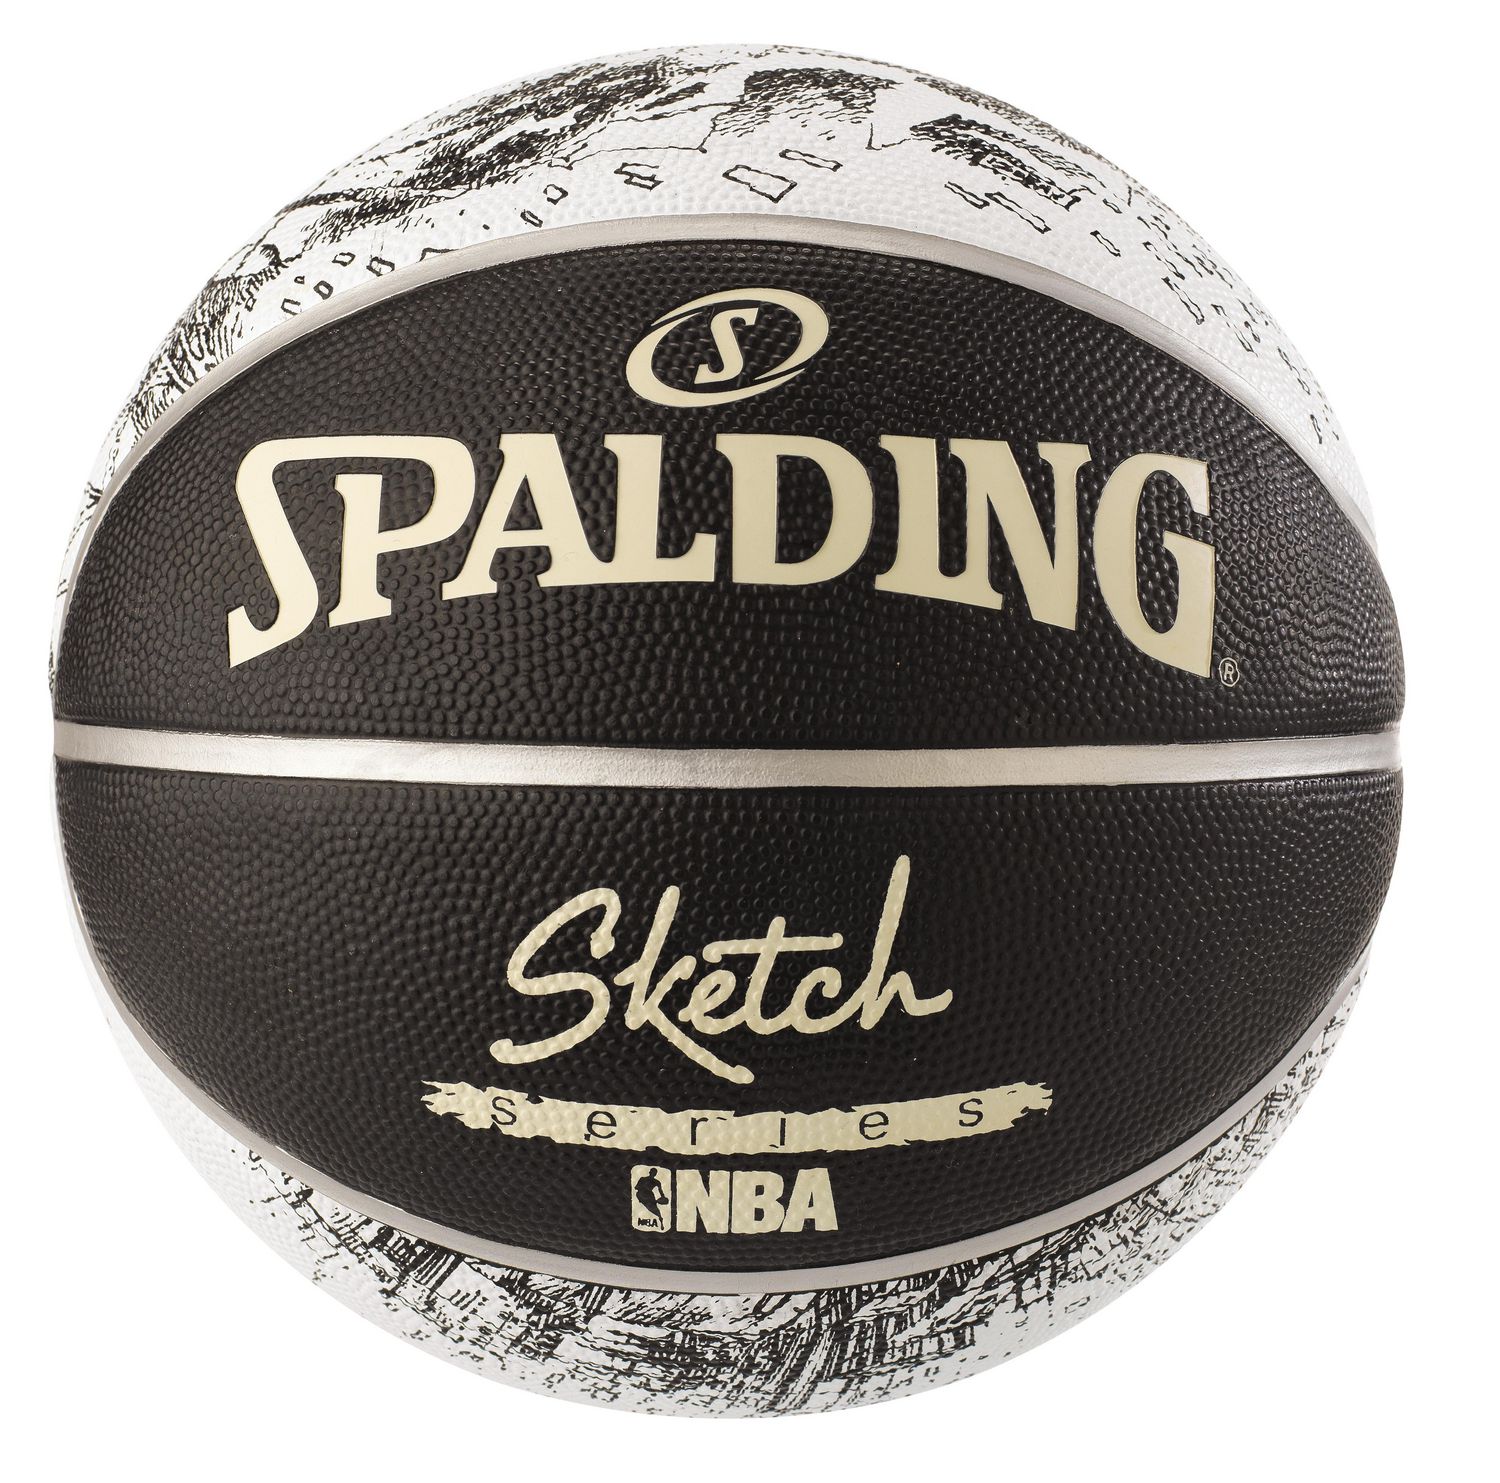 Spalding NBA Sketch Series Black/White Ball size 7 | Walmart Canada